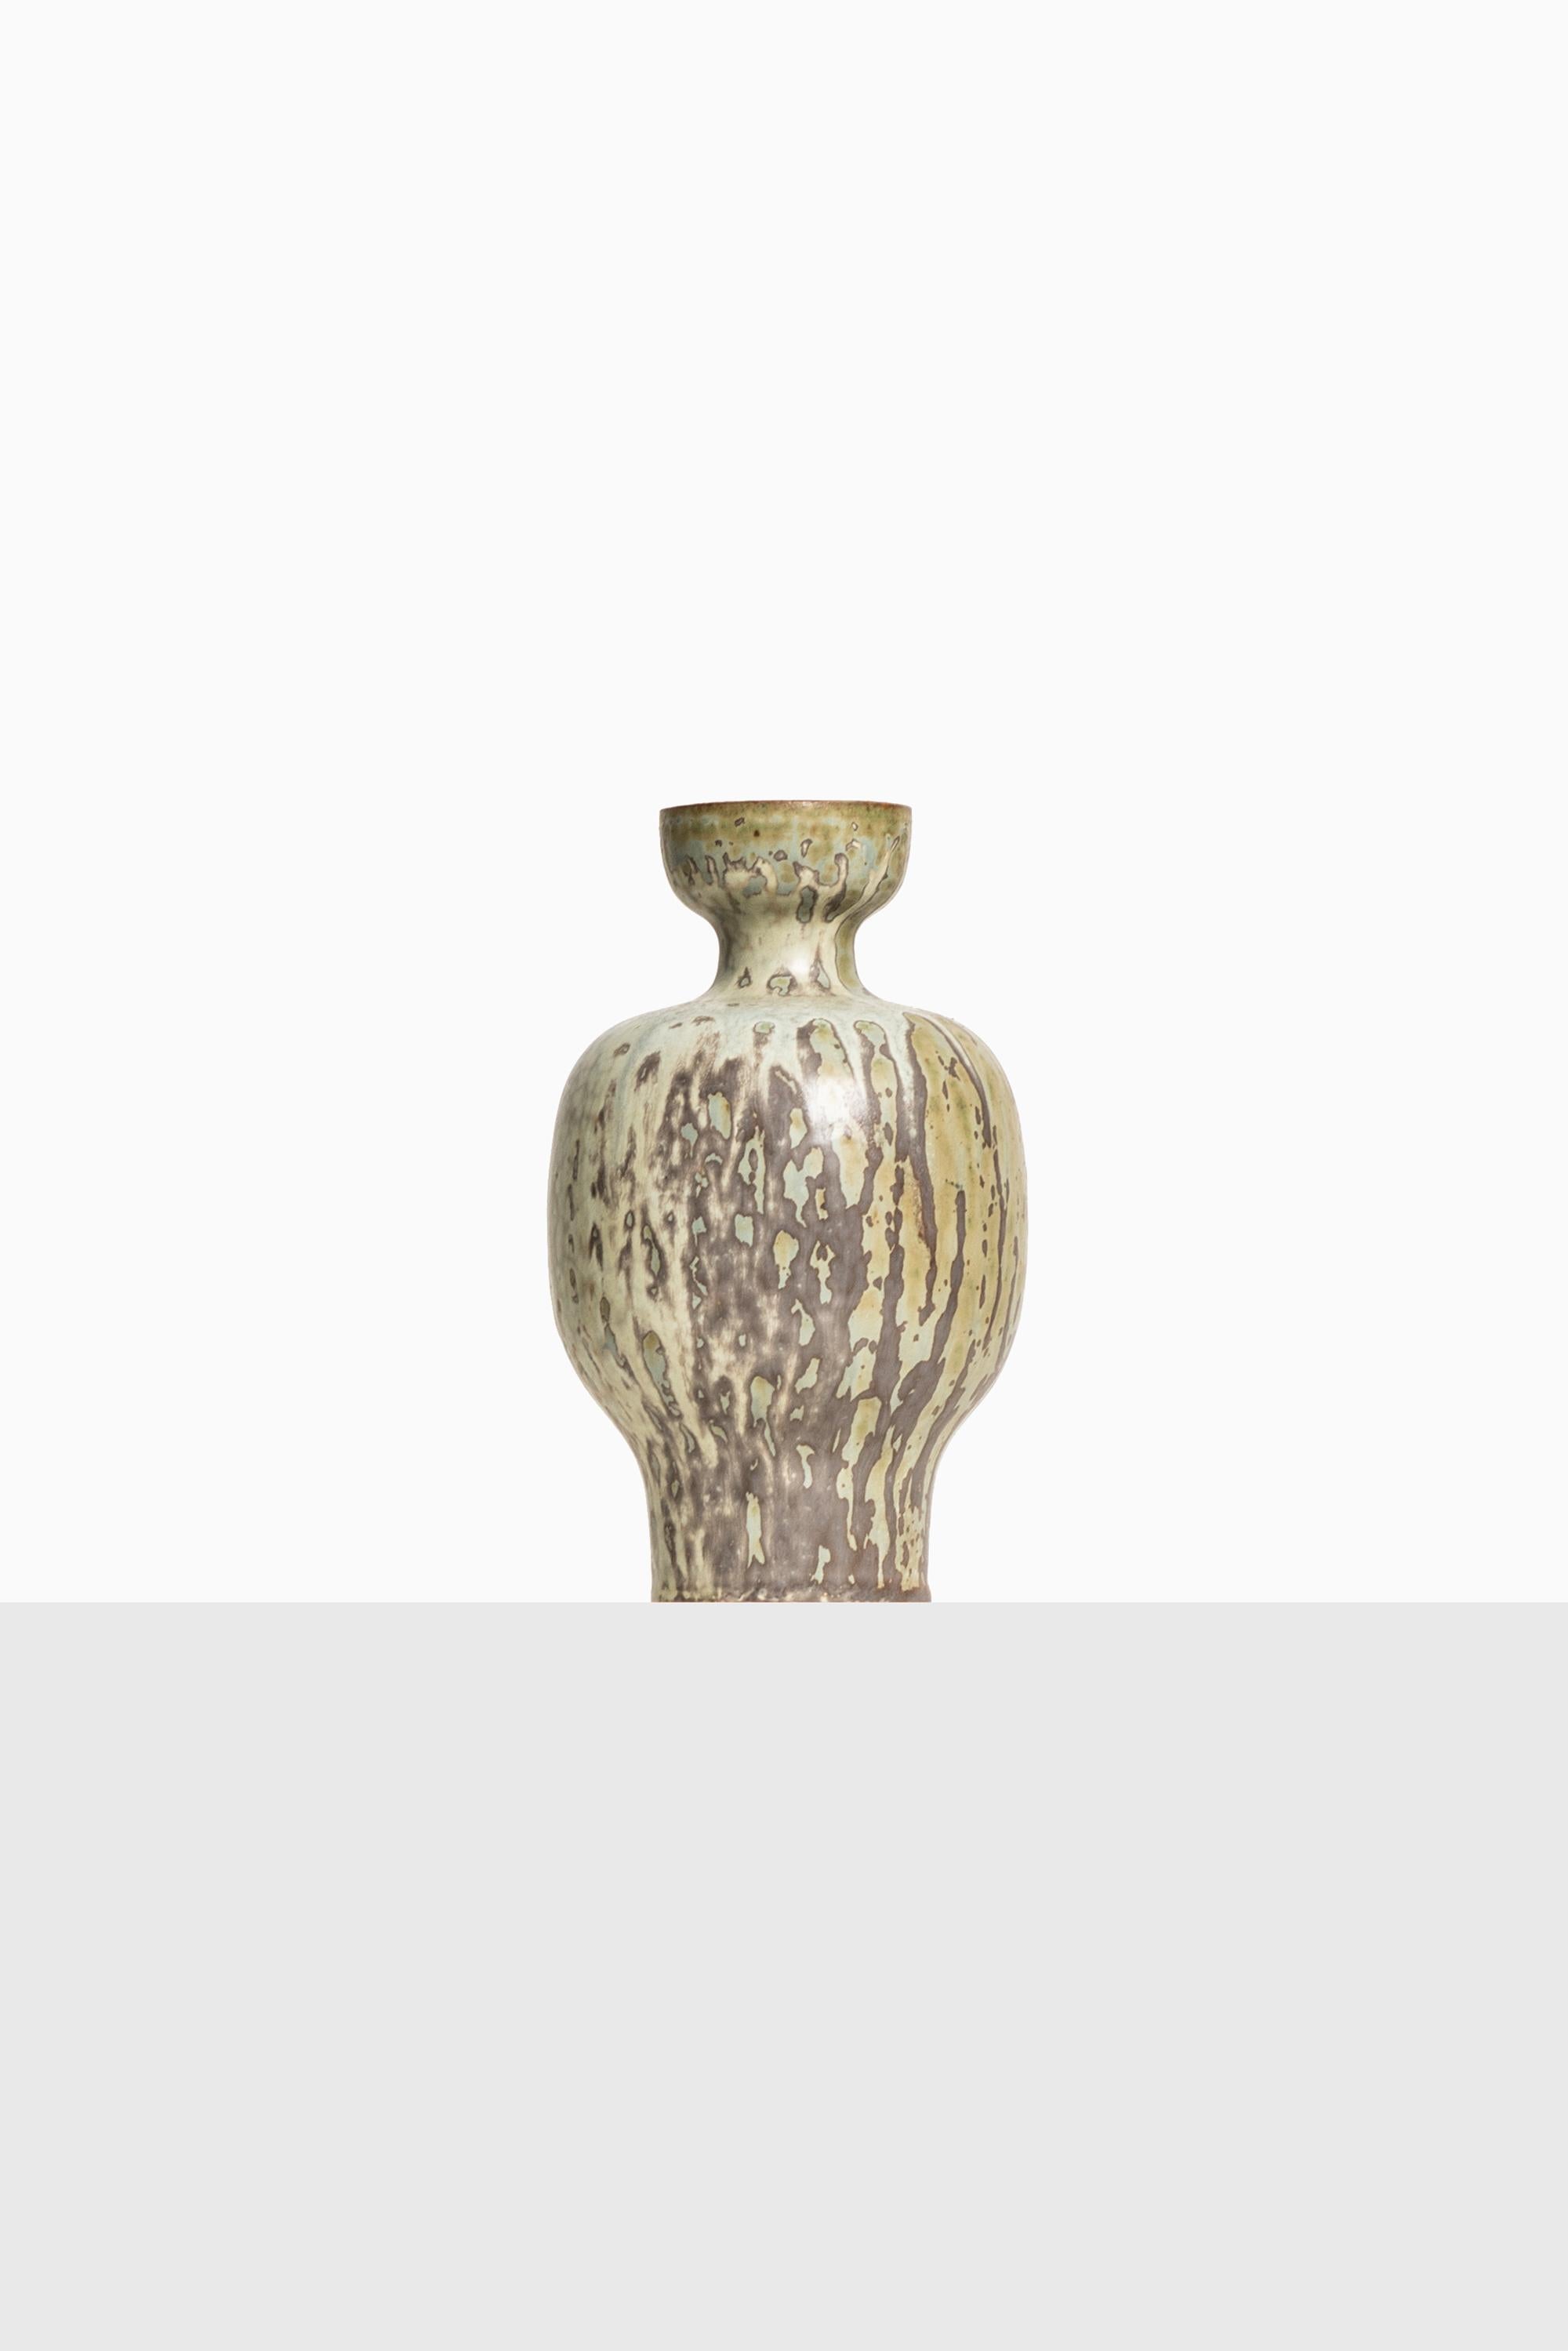 Very rare ceramic vase designed by Arne & Jacob Bang. Produced in Denmark.